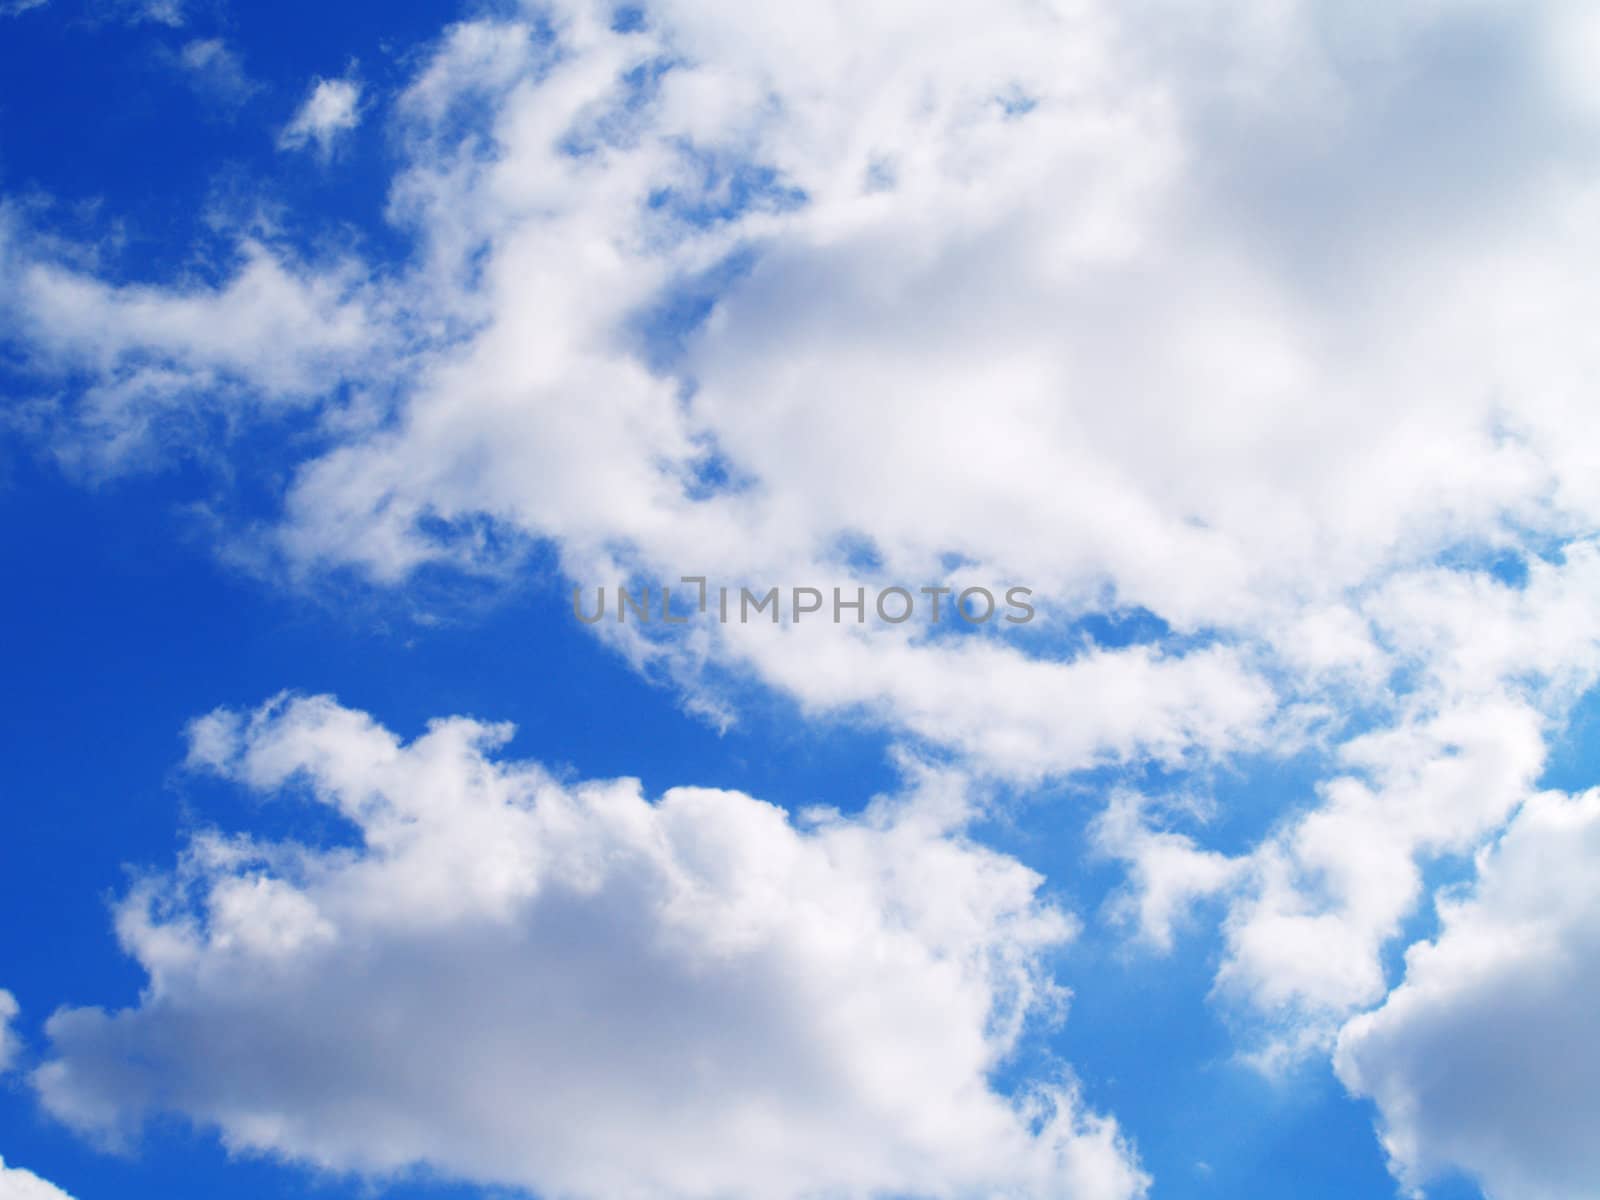 Clouds on sky by Auddmin